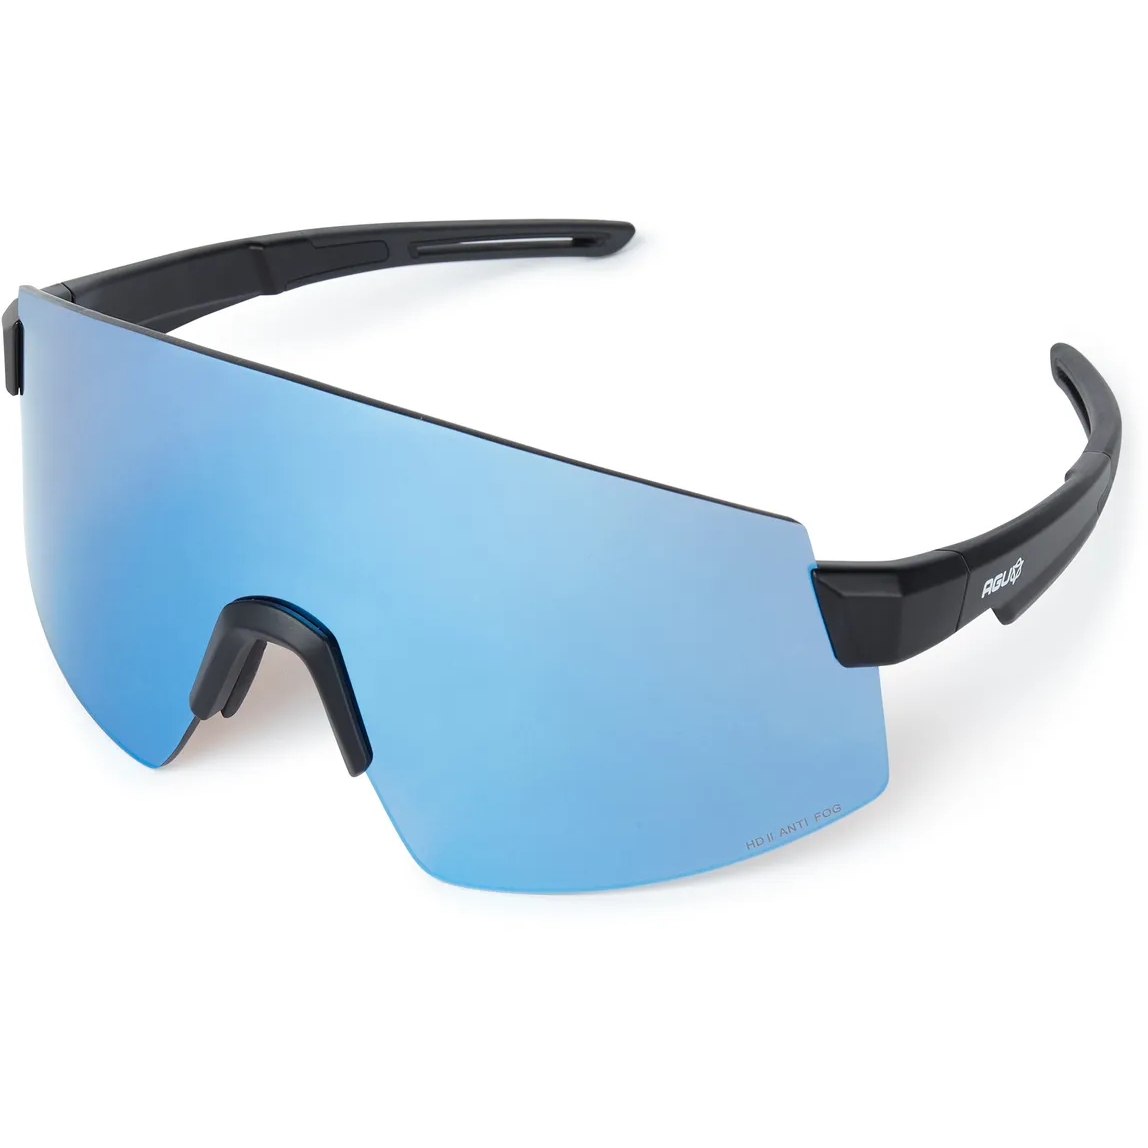 Productfoto van AGU Premium Vigor XL HDII Glasses - black